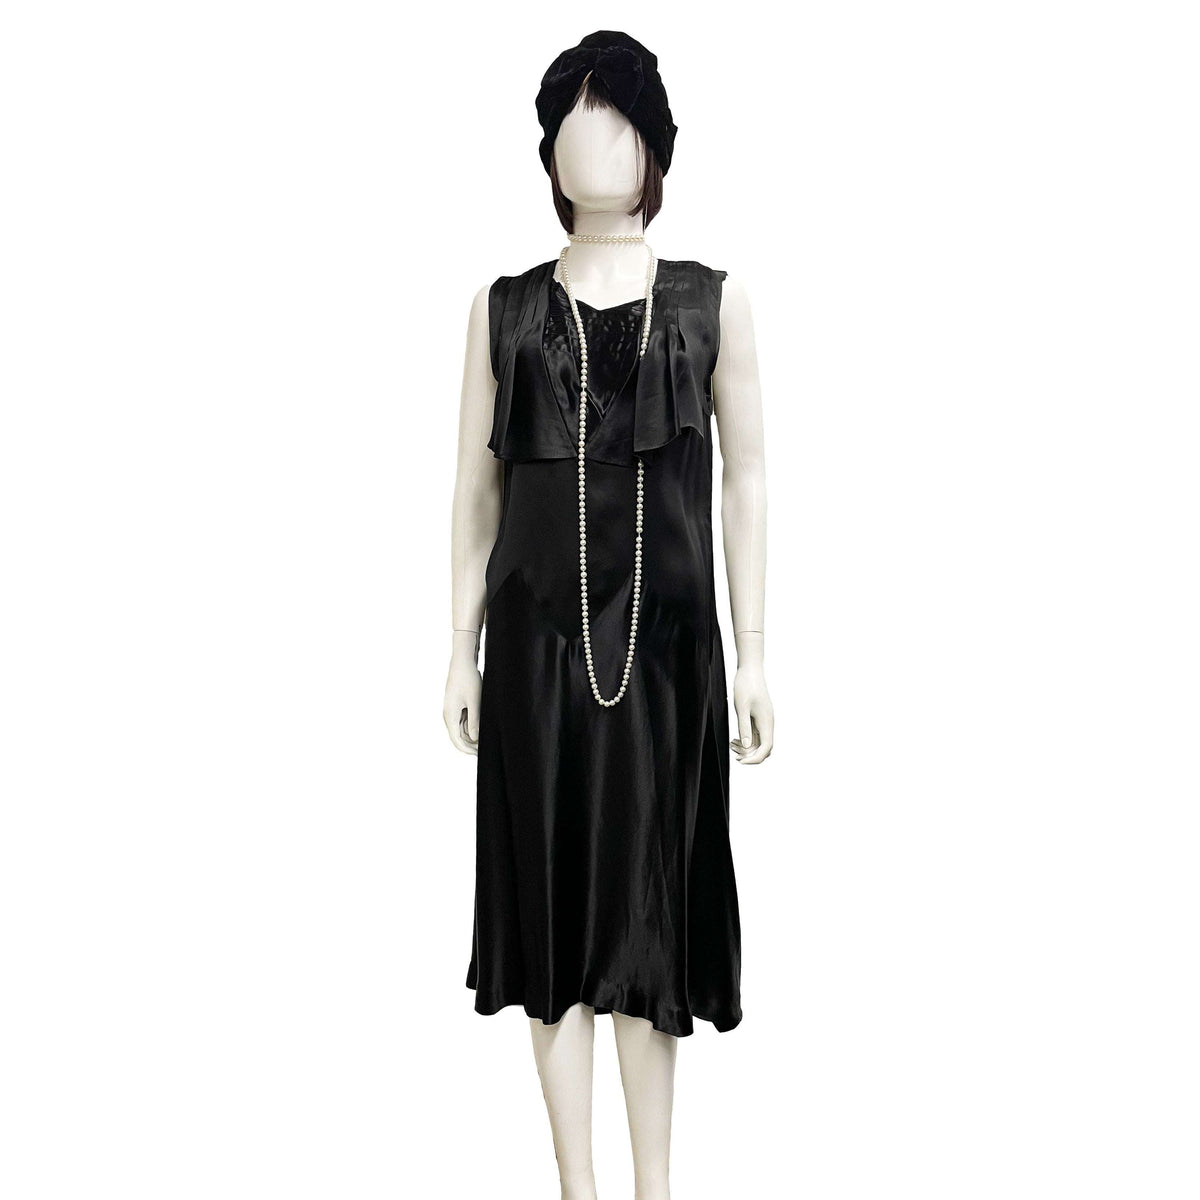 Premiere 1920s Black Satin Dress Adult Costume